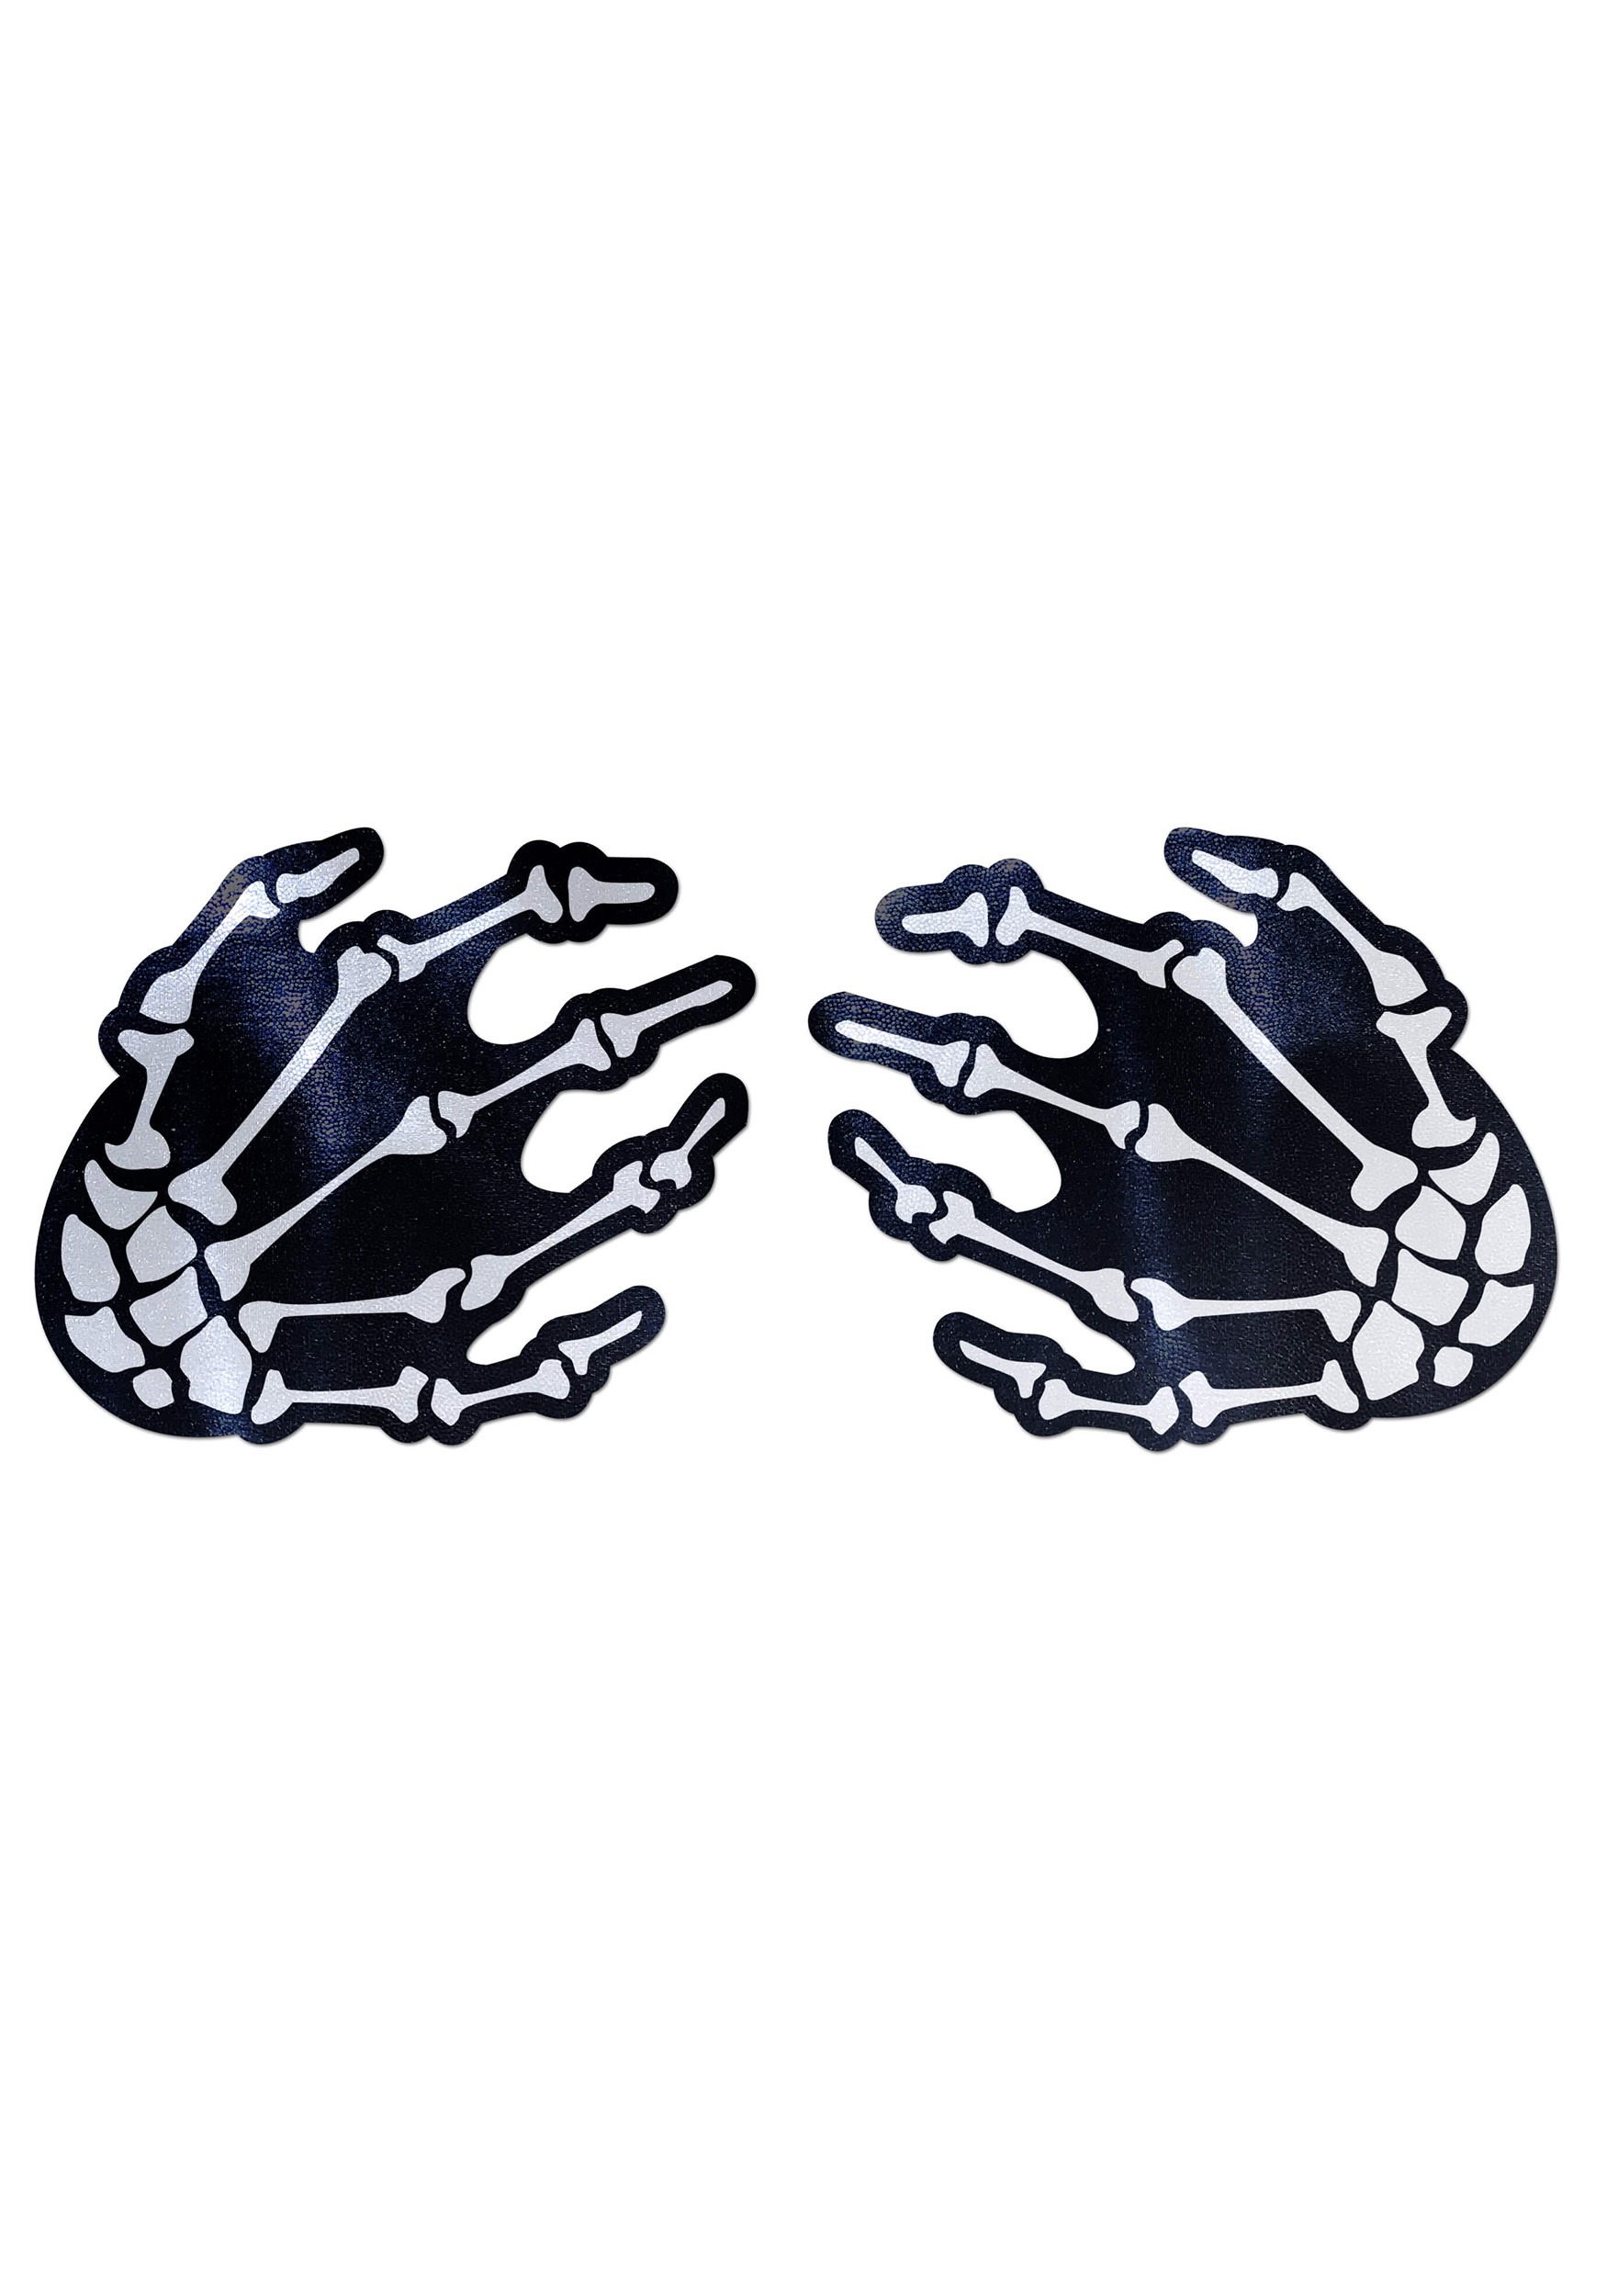 Adult Pastease Skeleton Hands Pasties